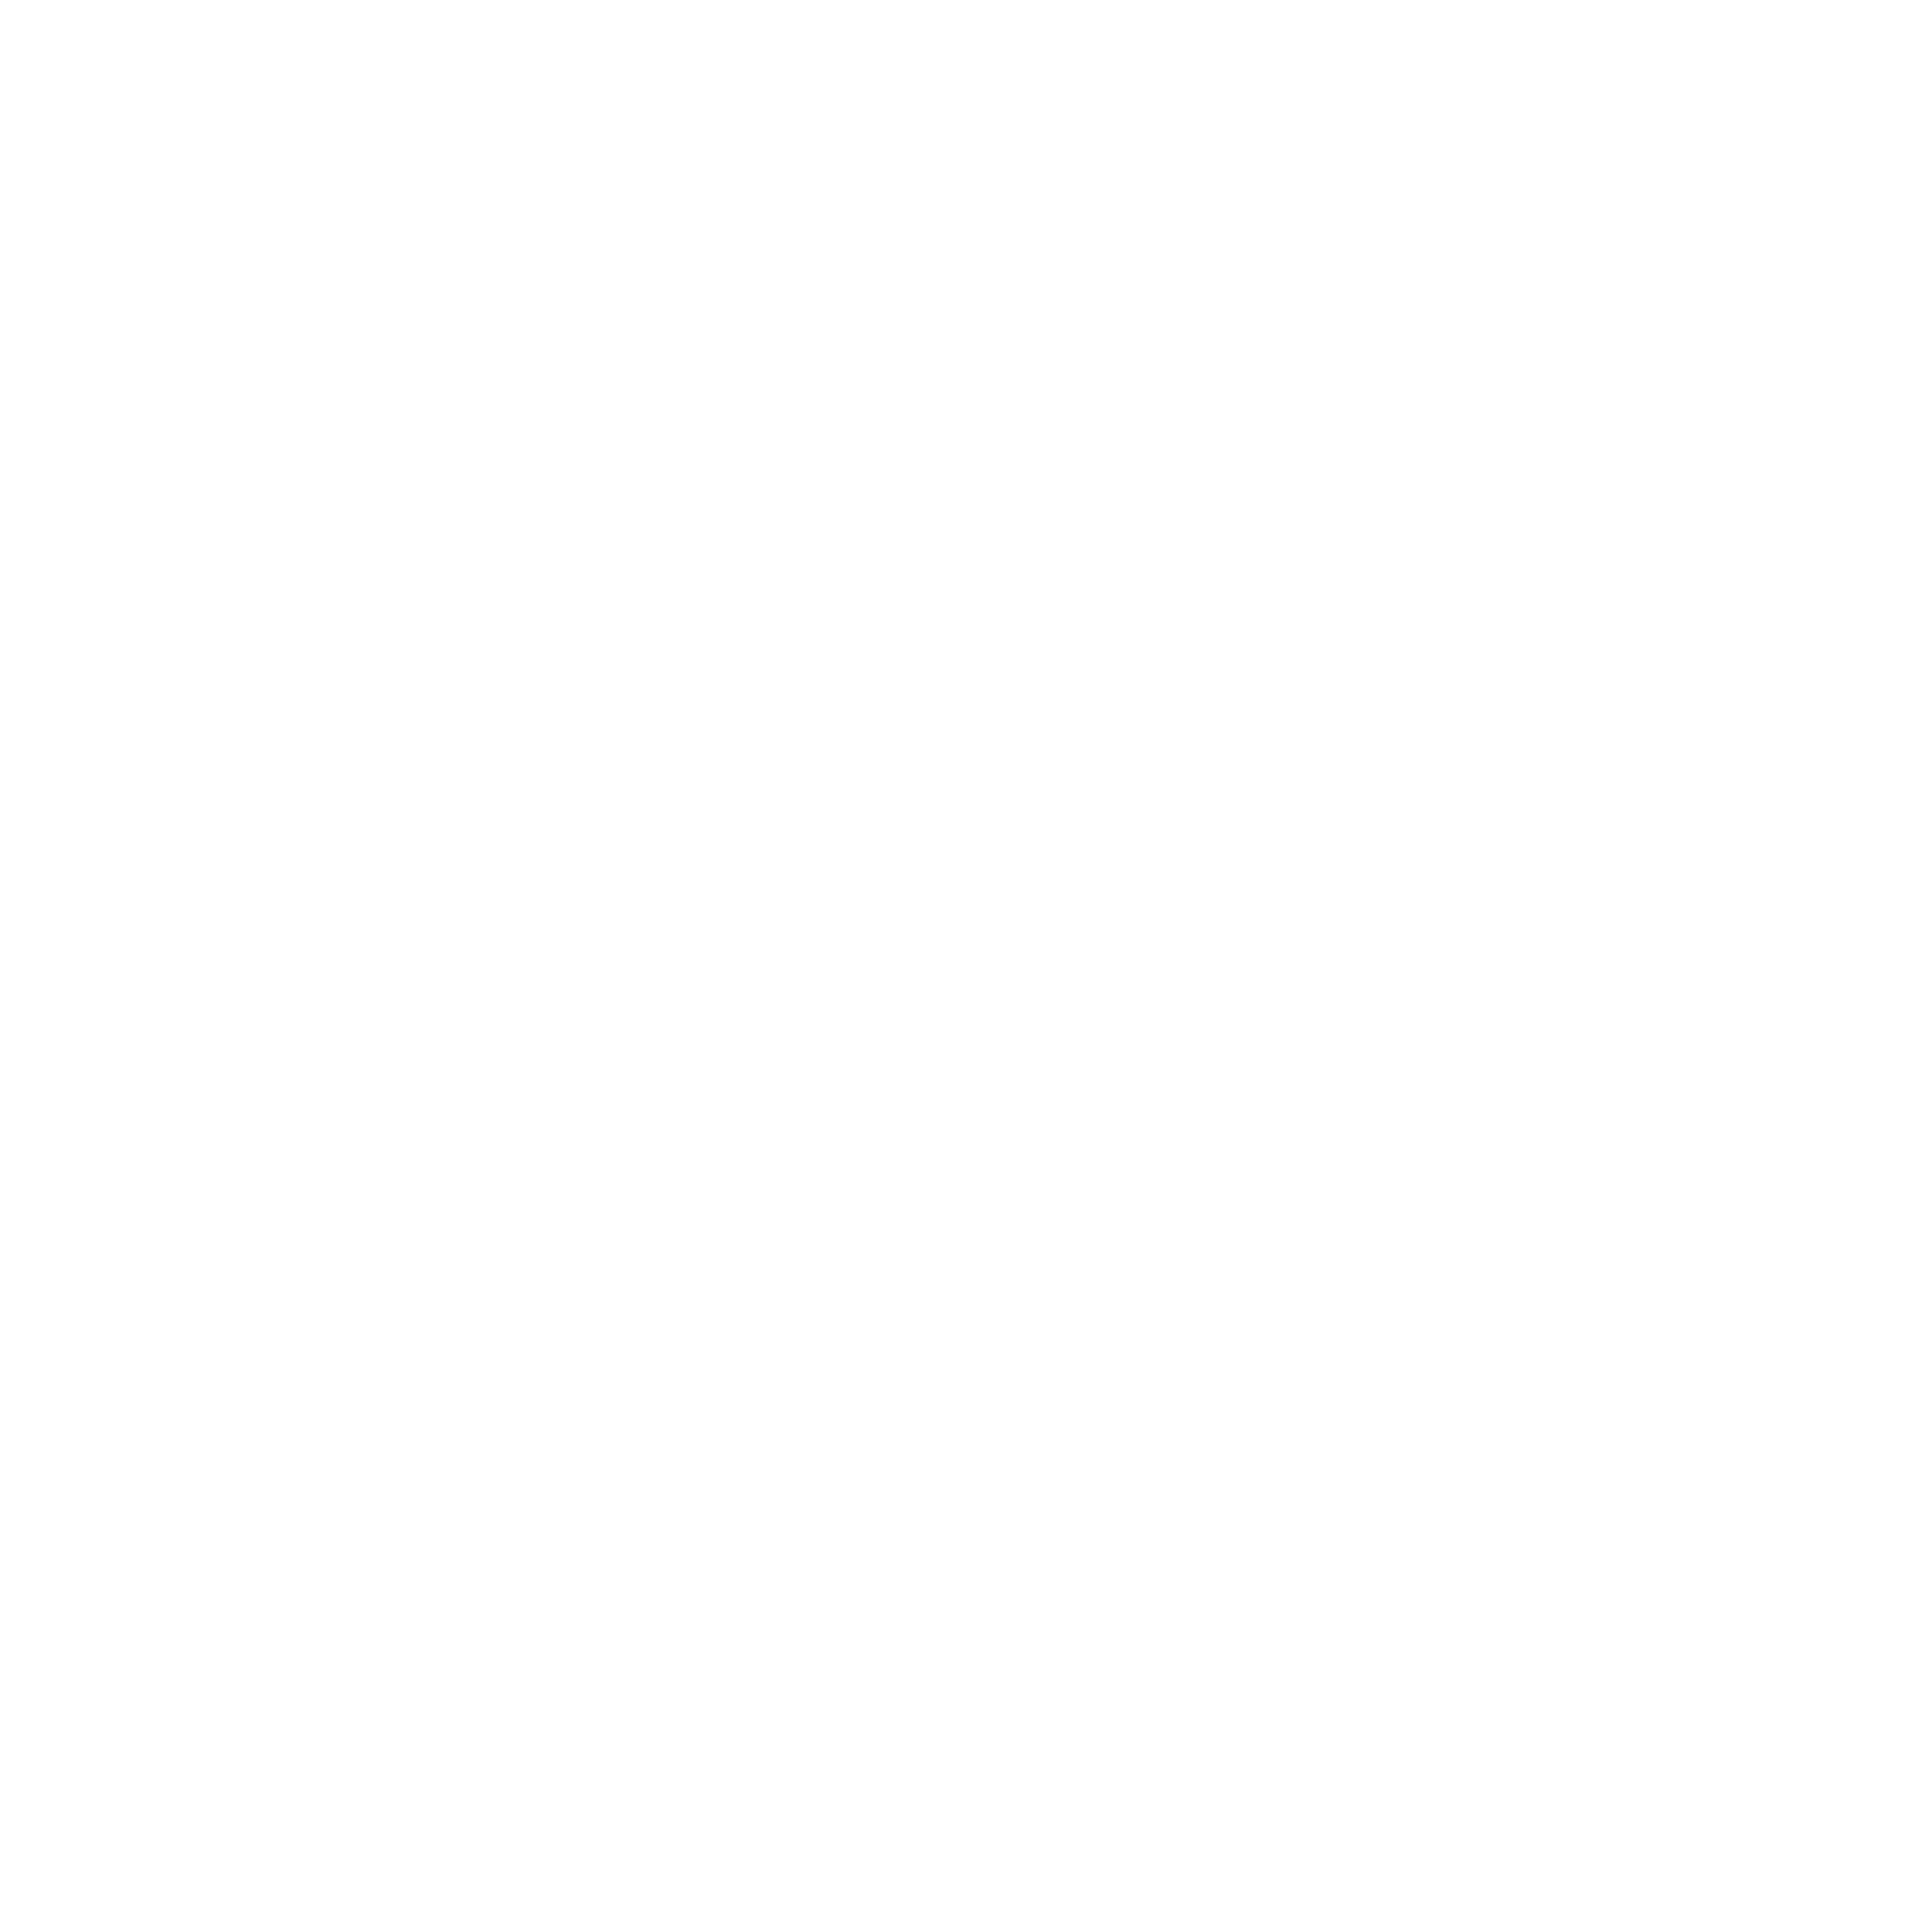 AE Branding | Strategy & Design logo